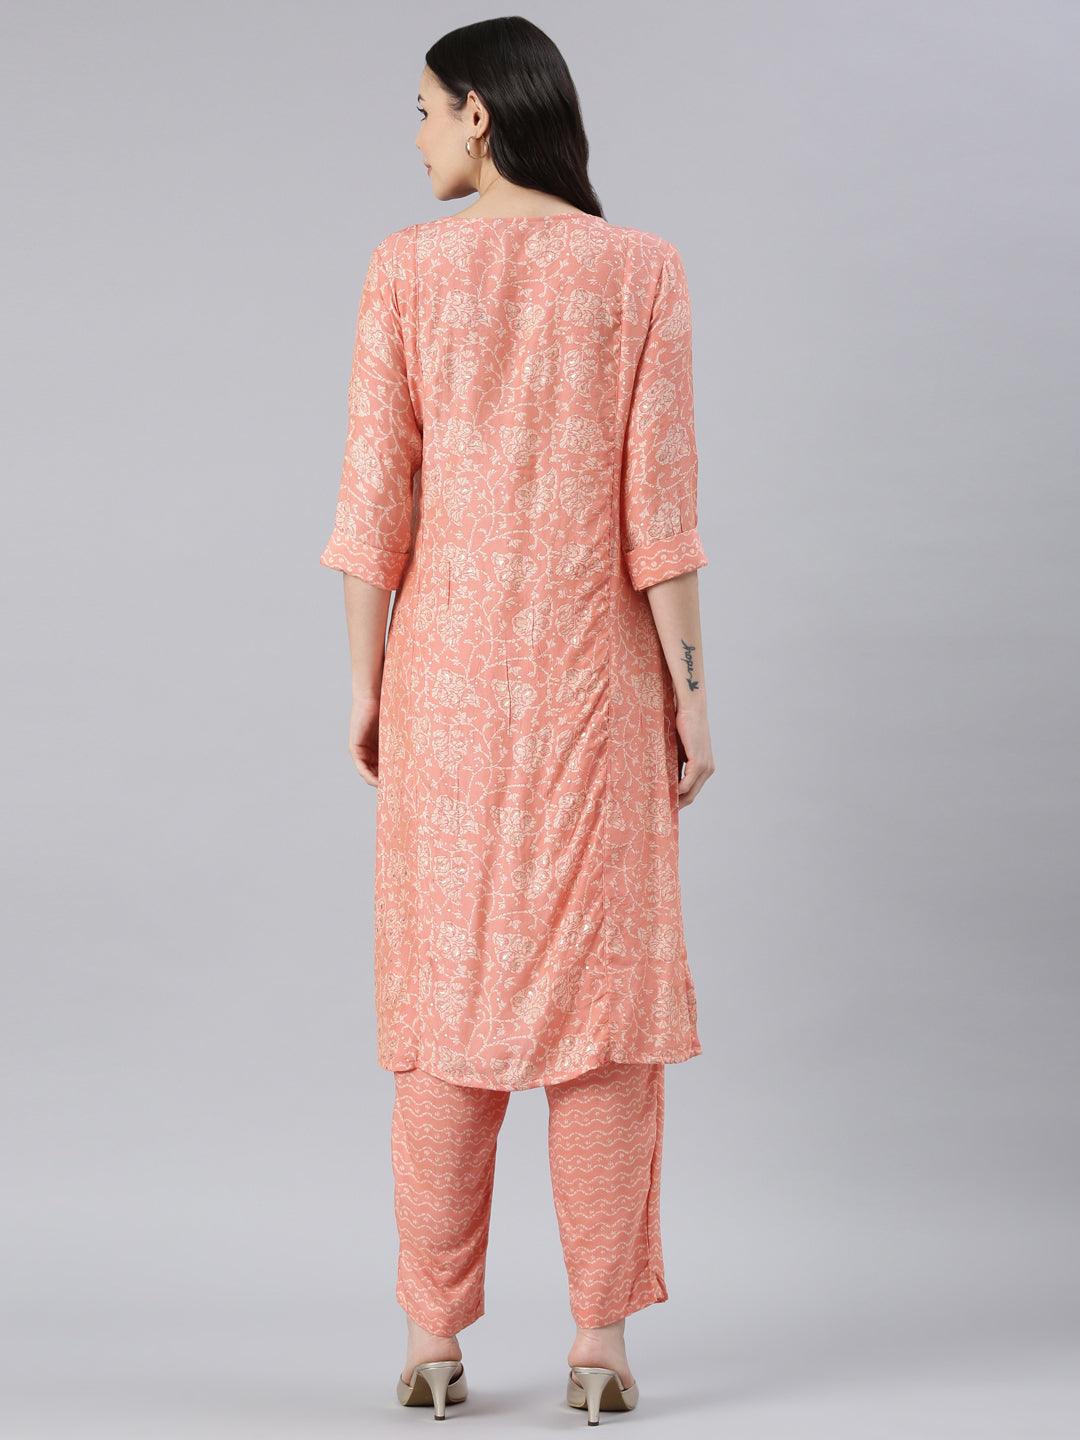 Peach pure silk women's kurta featuring intricate print patterns